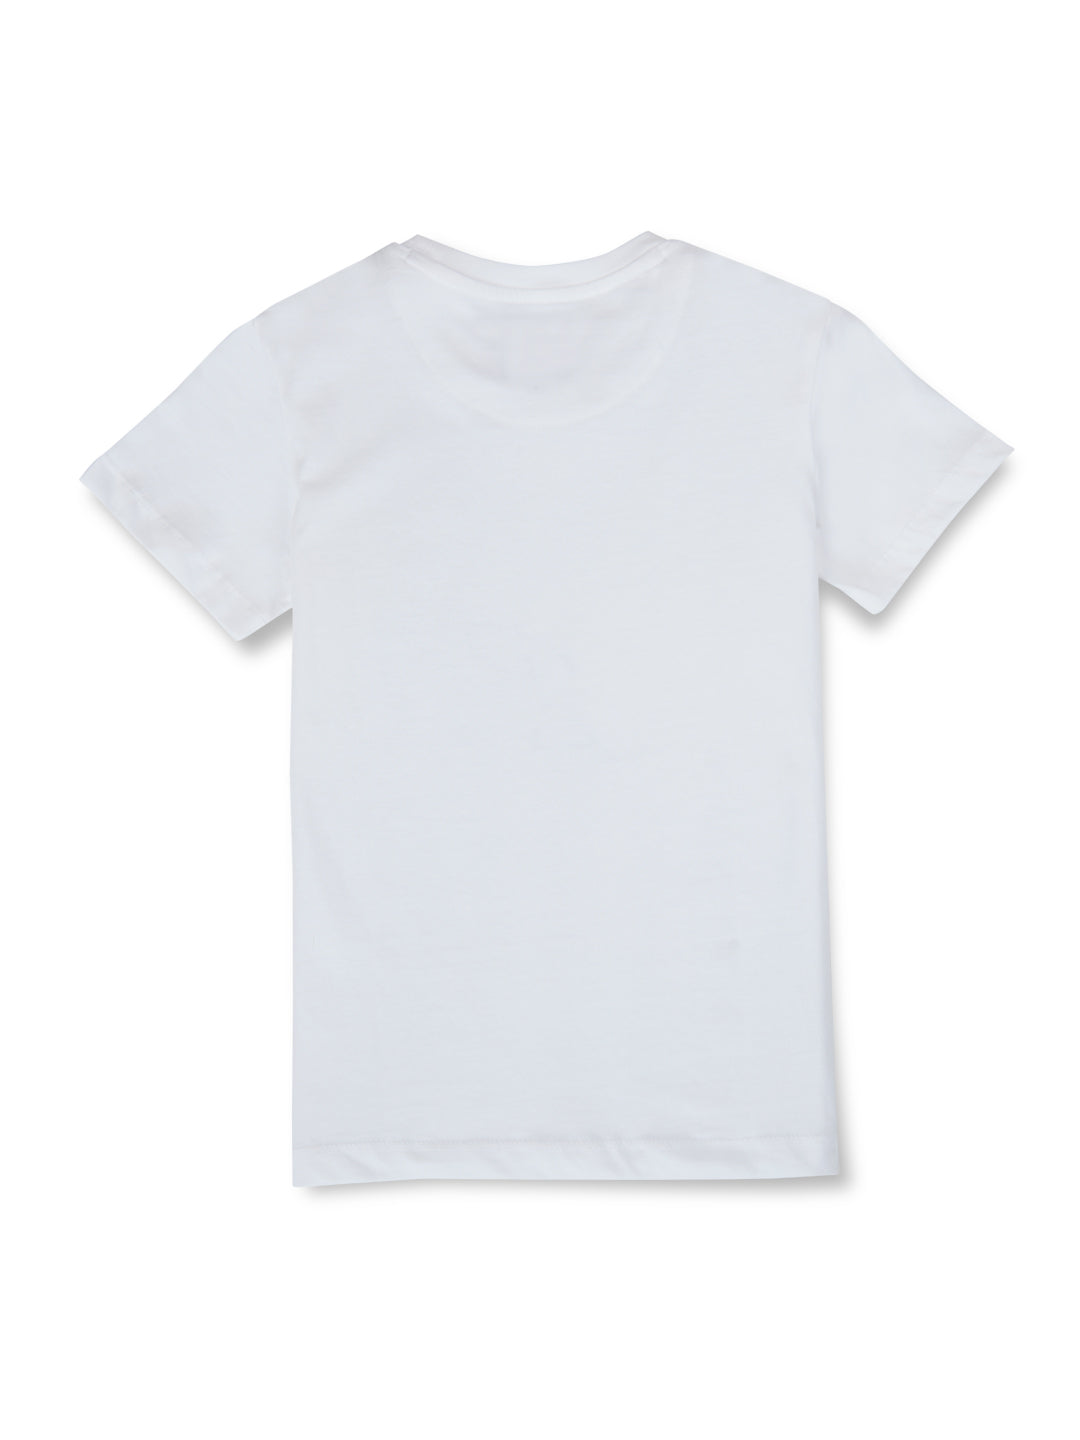 Boys White Printed Cotton Half Sleeves T-Shirt